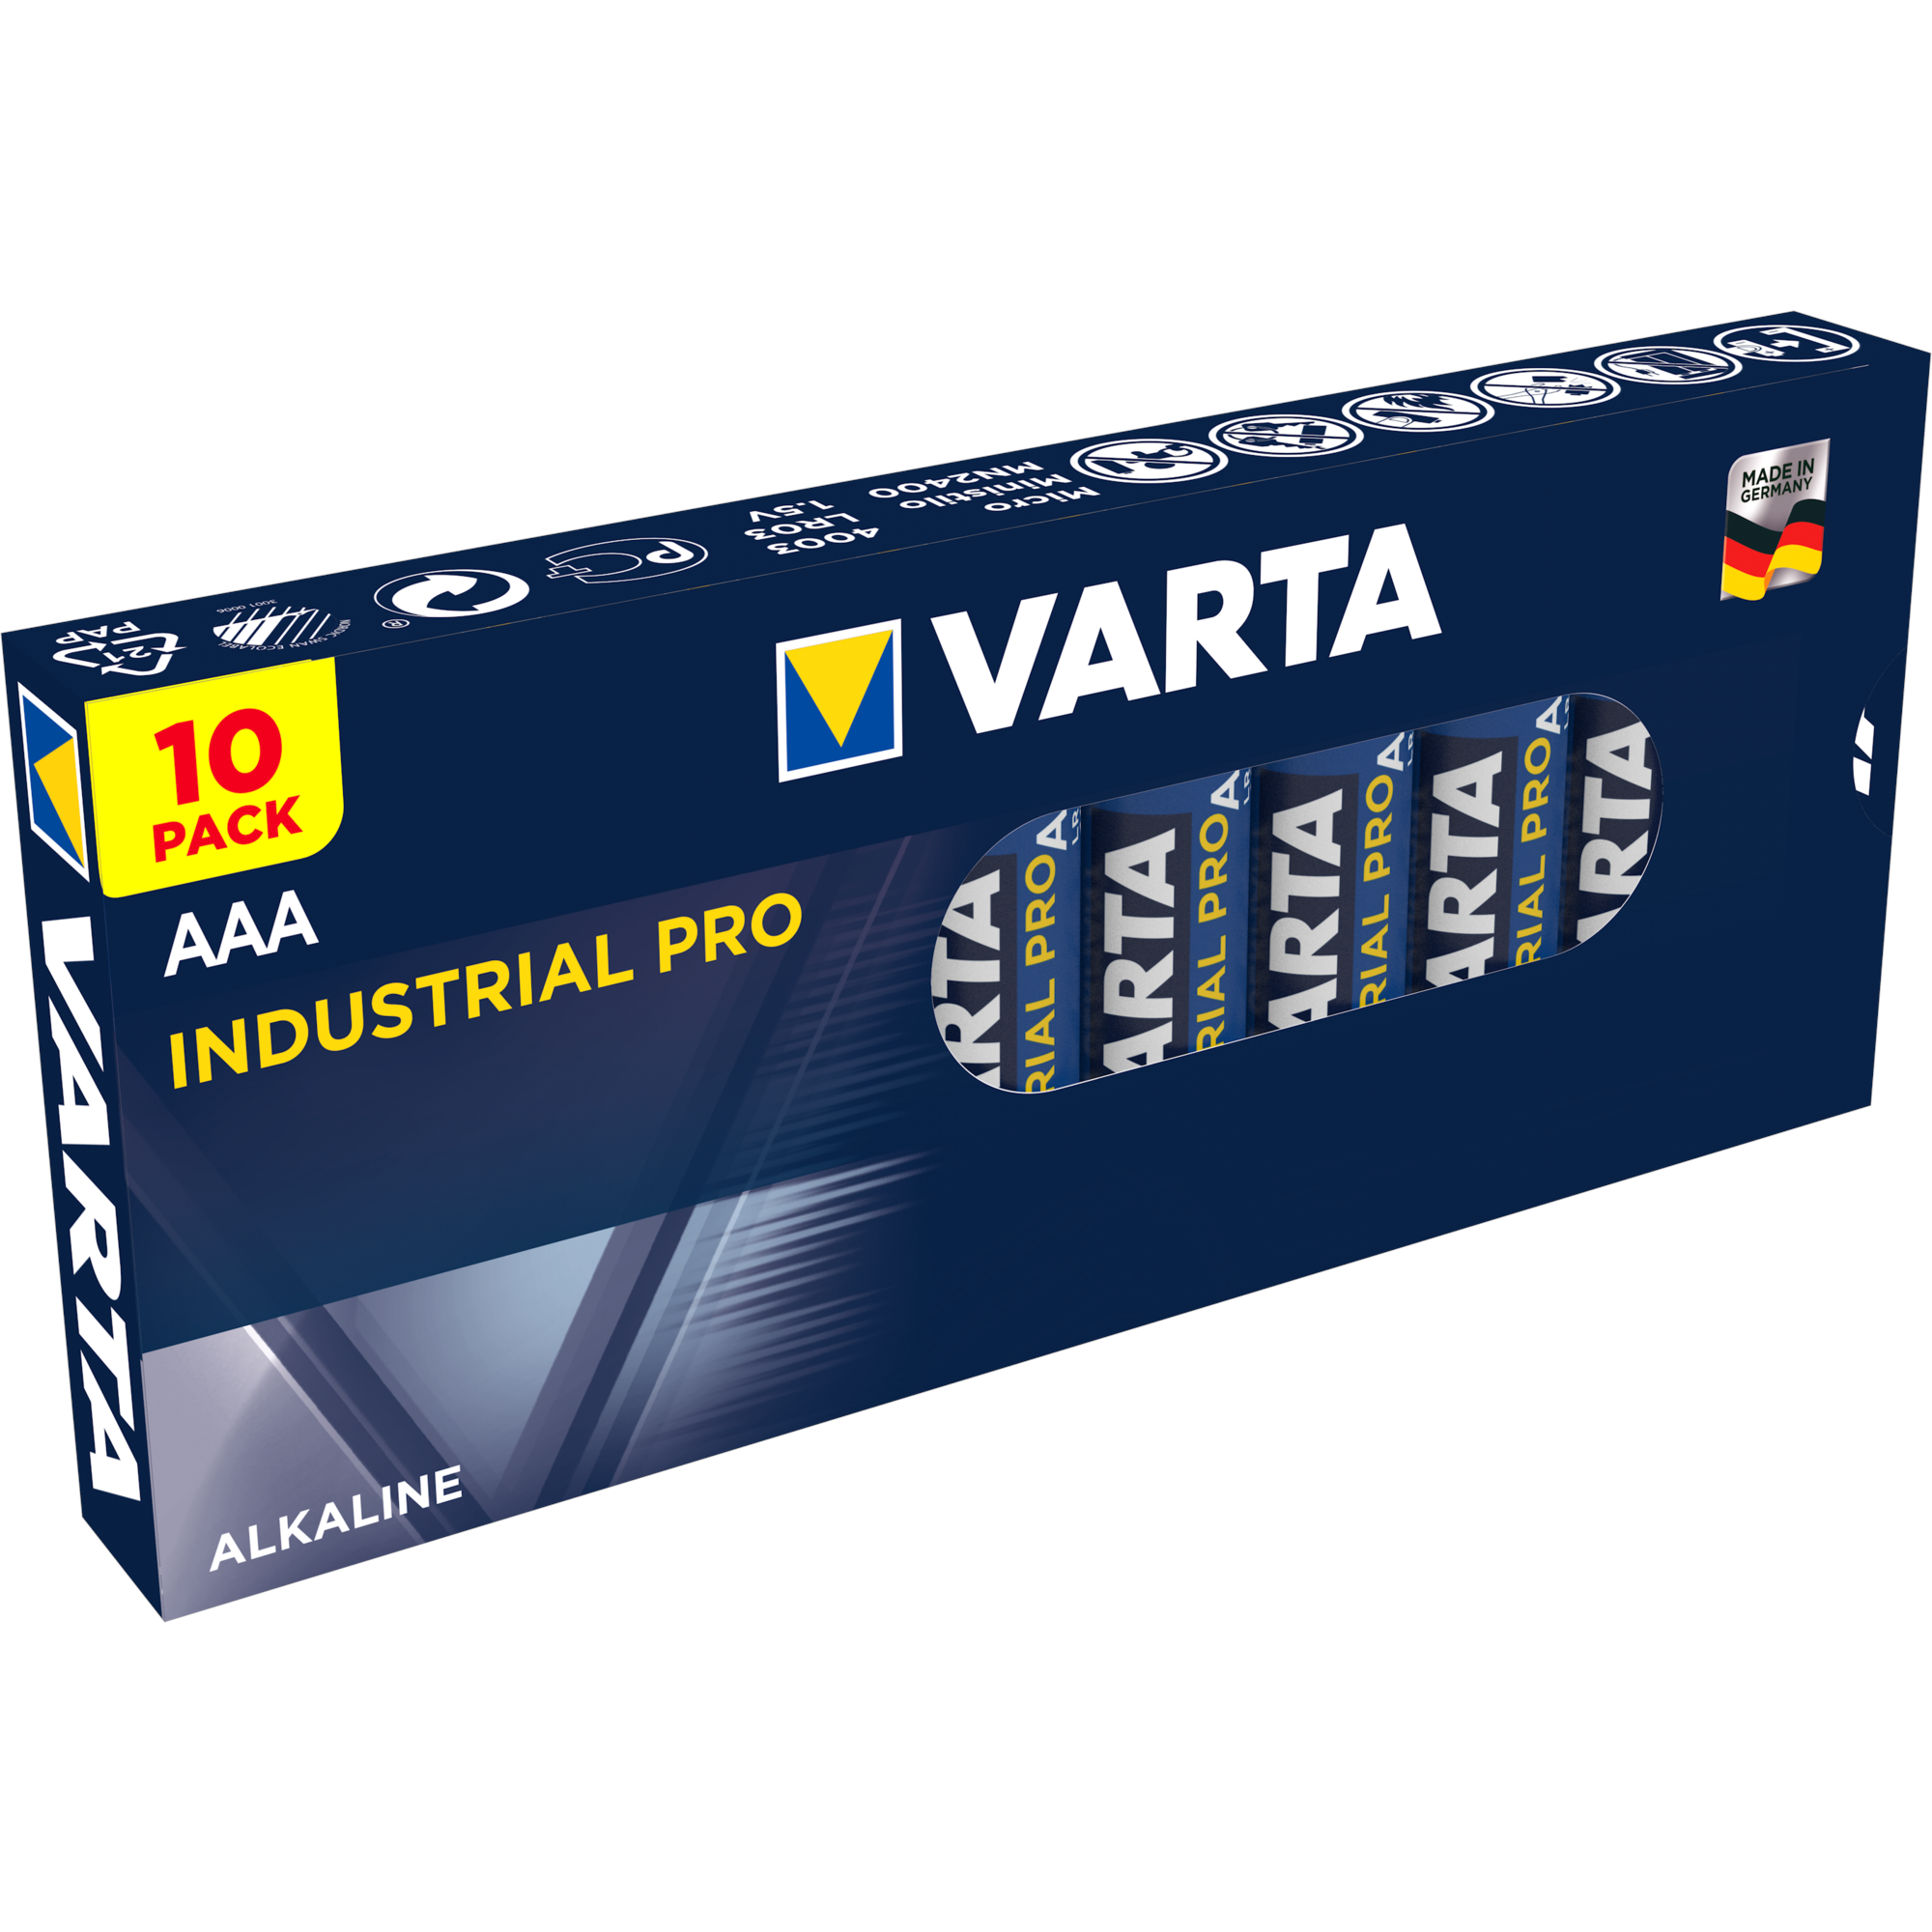 Varta Industrial PRO Alkaline AAA 10-Pack